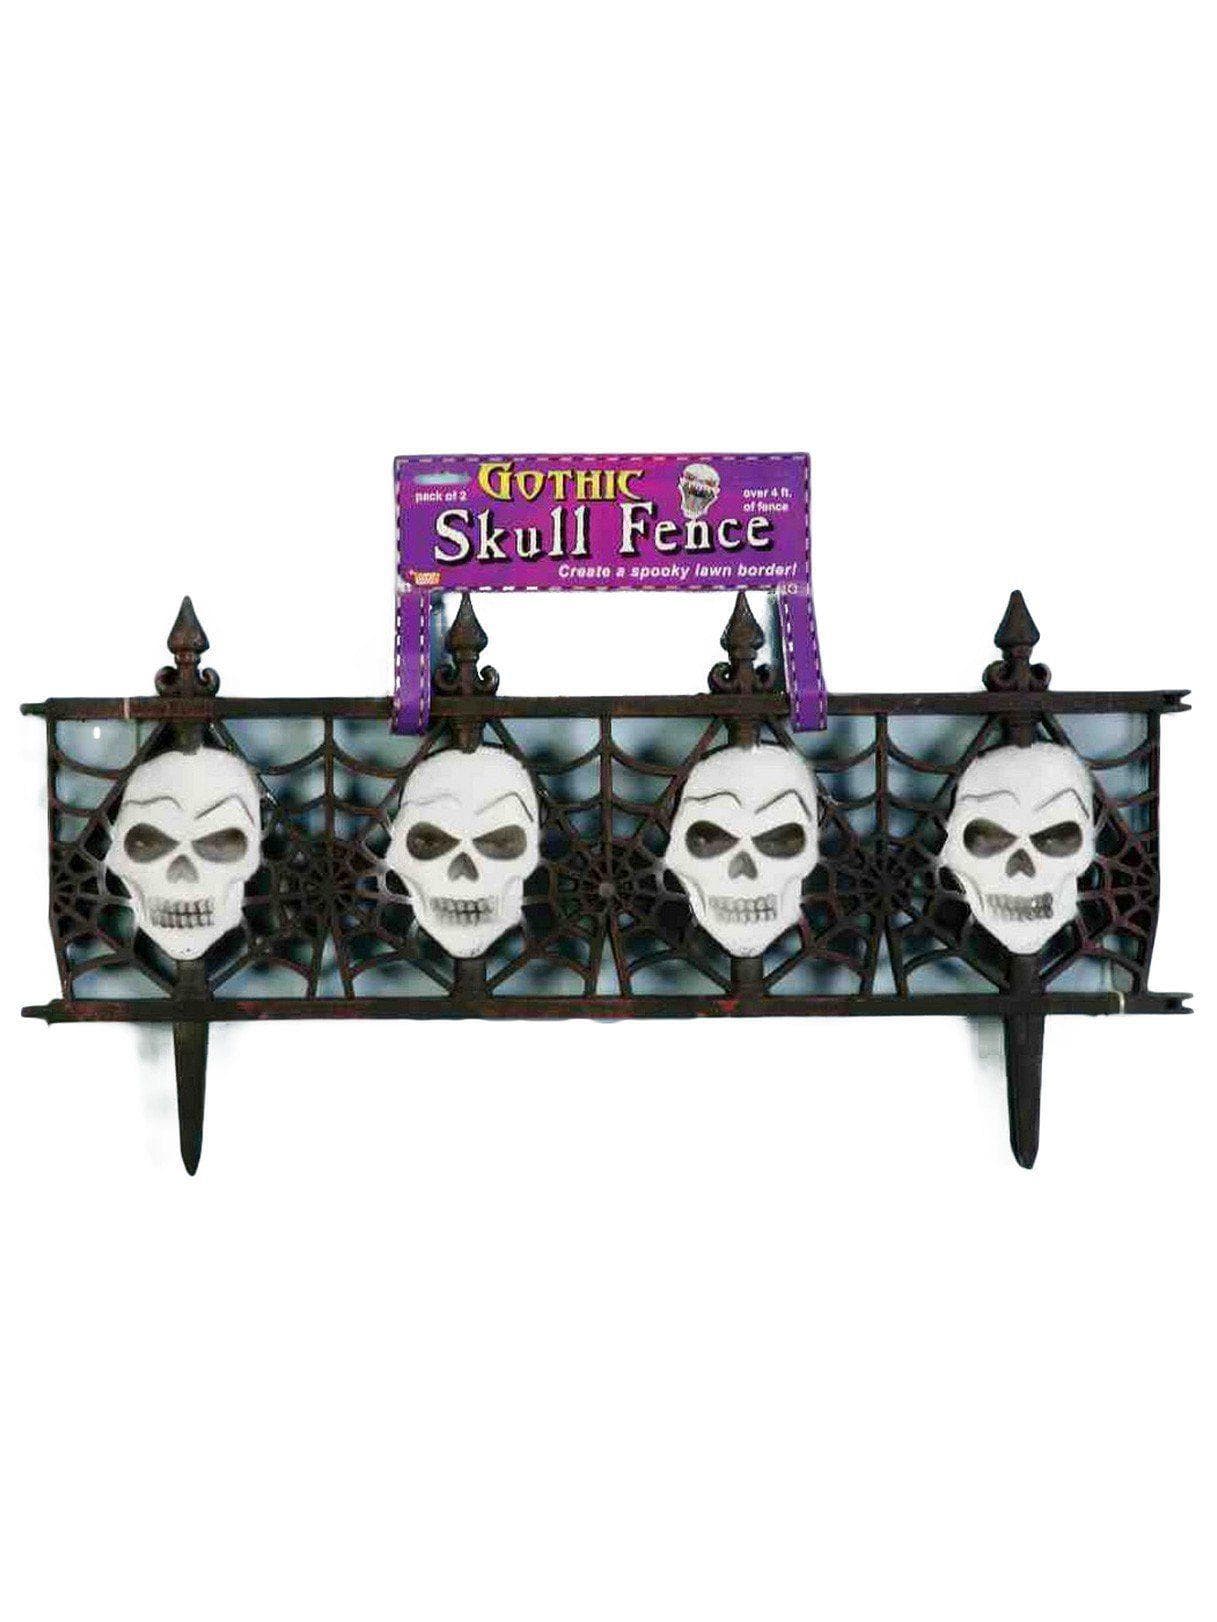 2 Piece Gothic Skull Fence - costumes.com